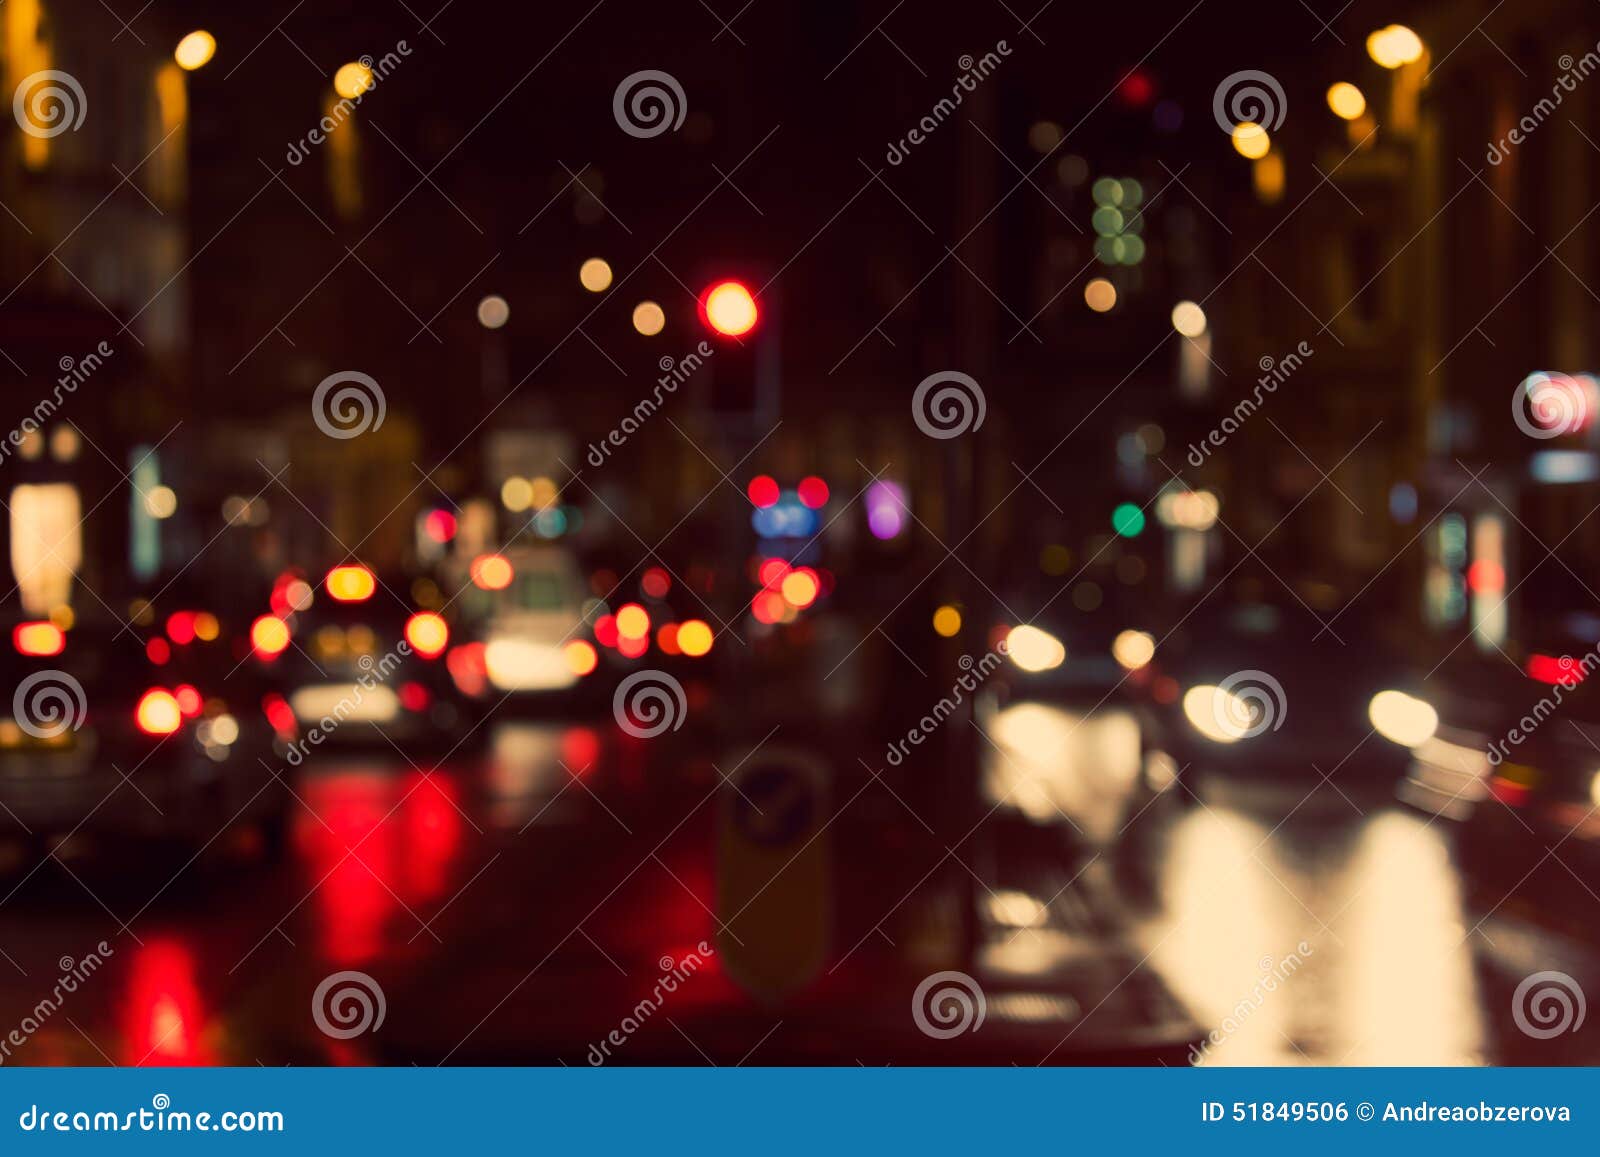 defocused, blurred urban abstract traffic background